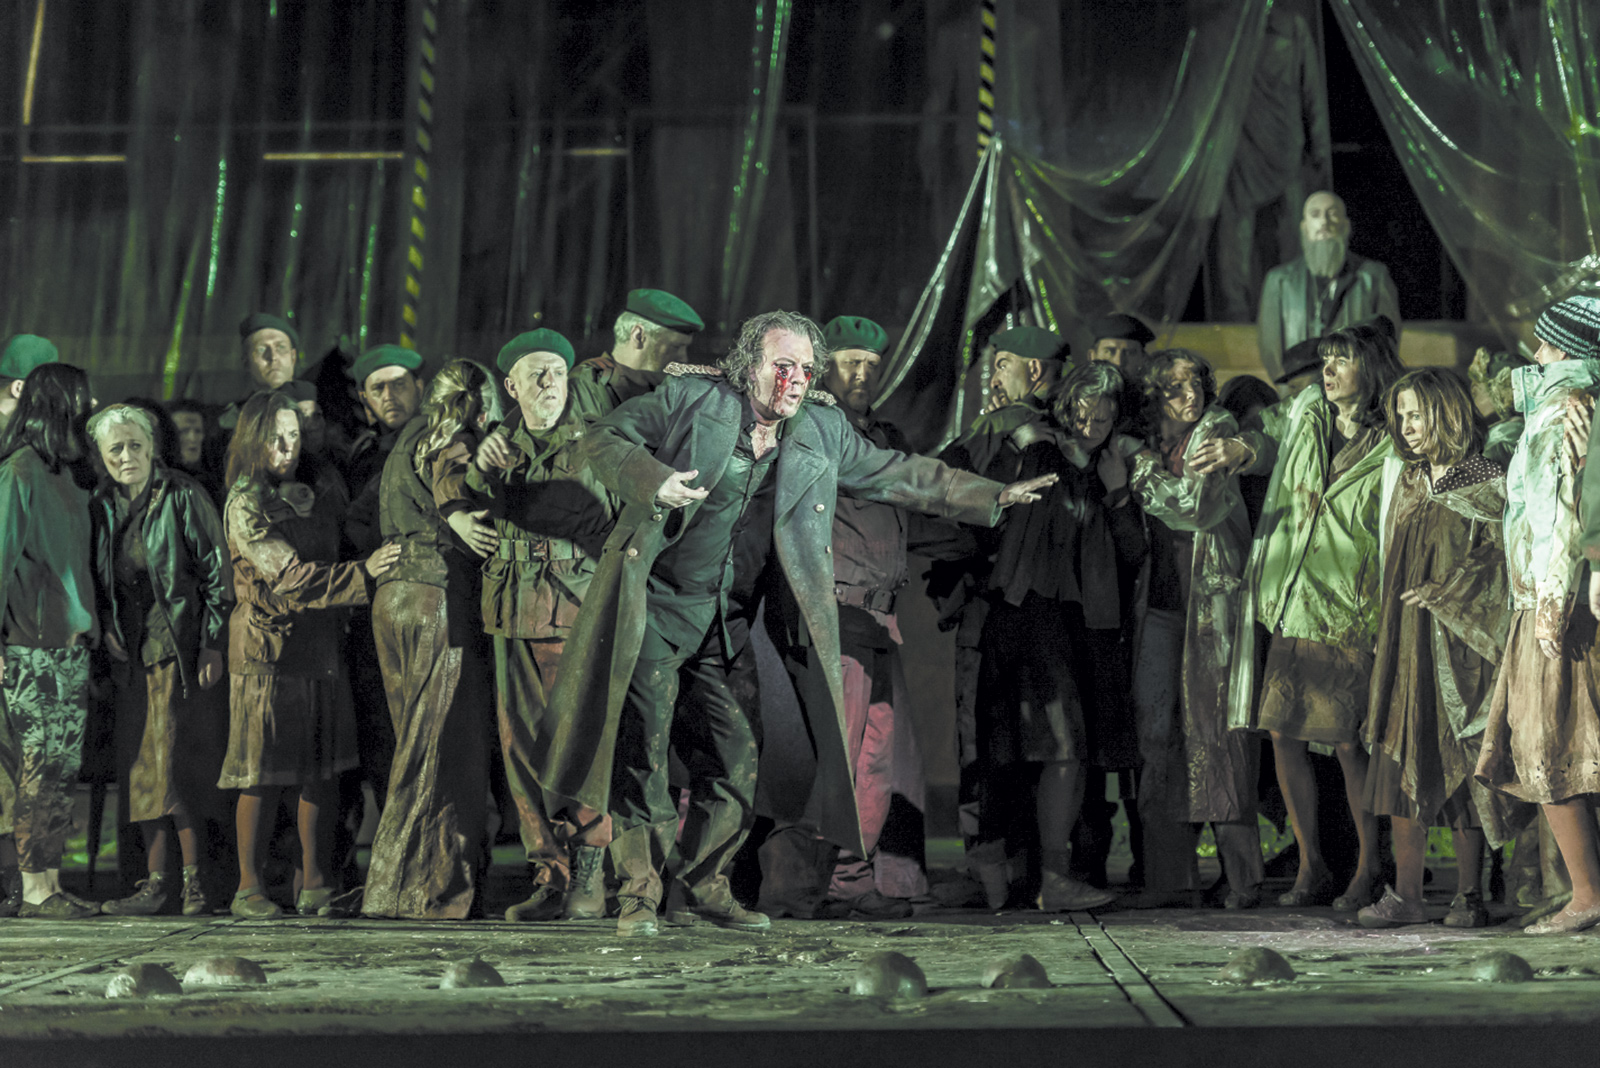 Johan Reuter as Oedipe with members of the Royal Opera Chorus in Oedipe